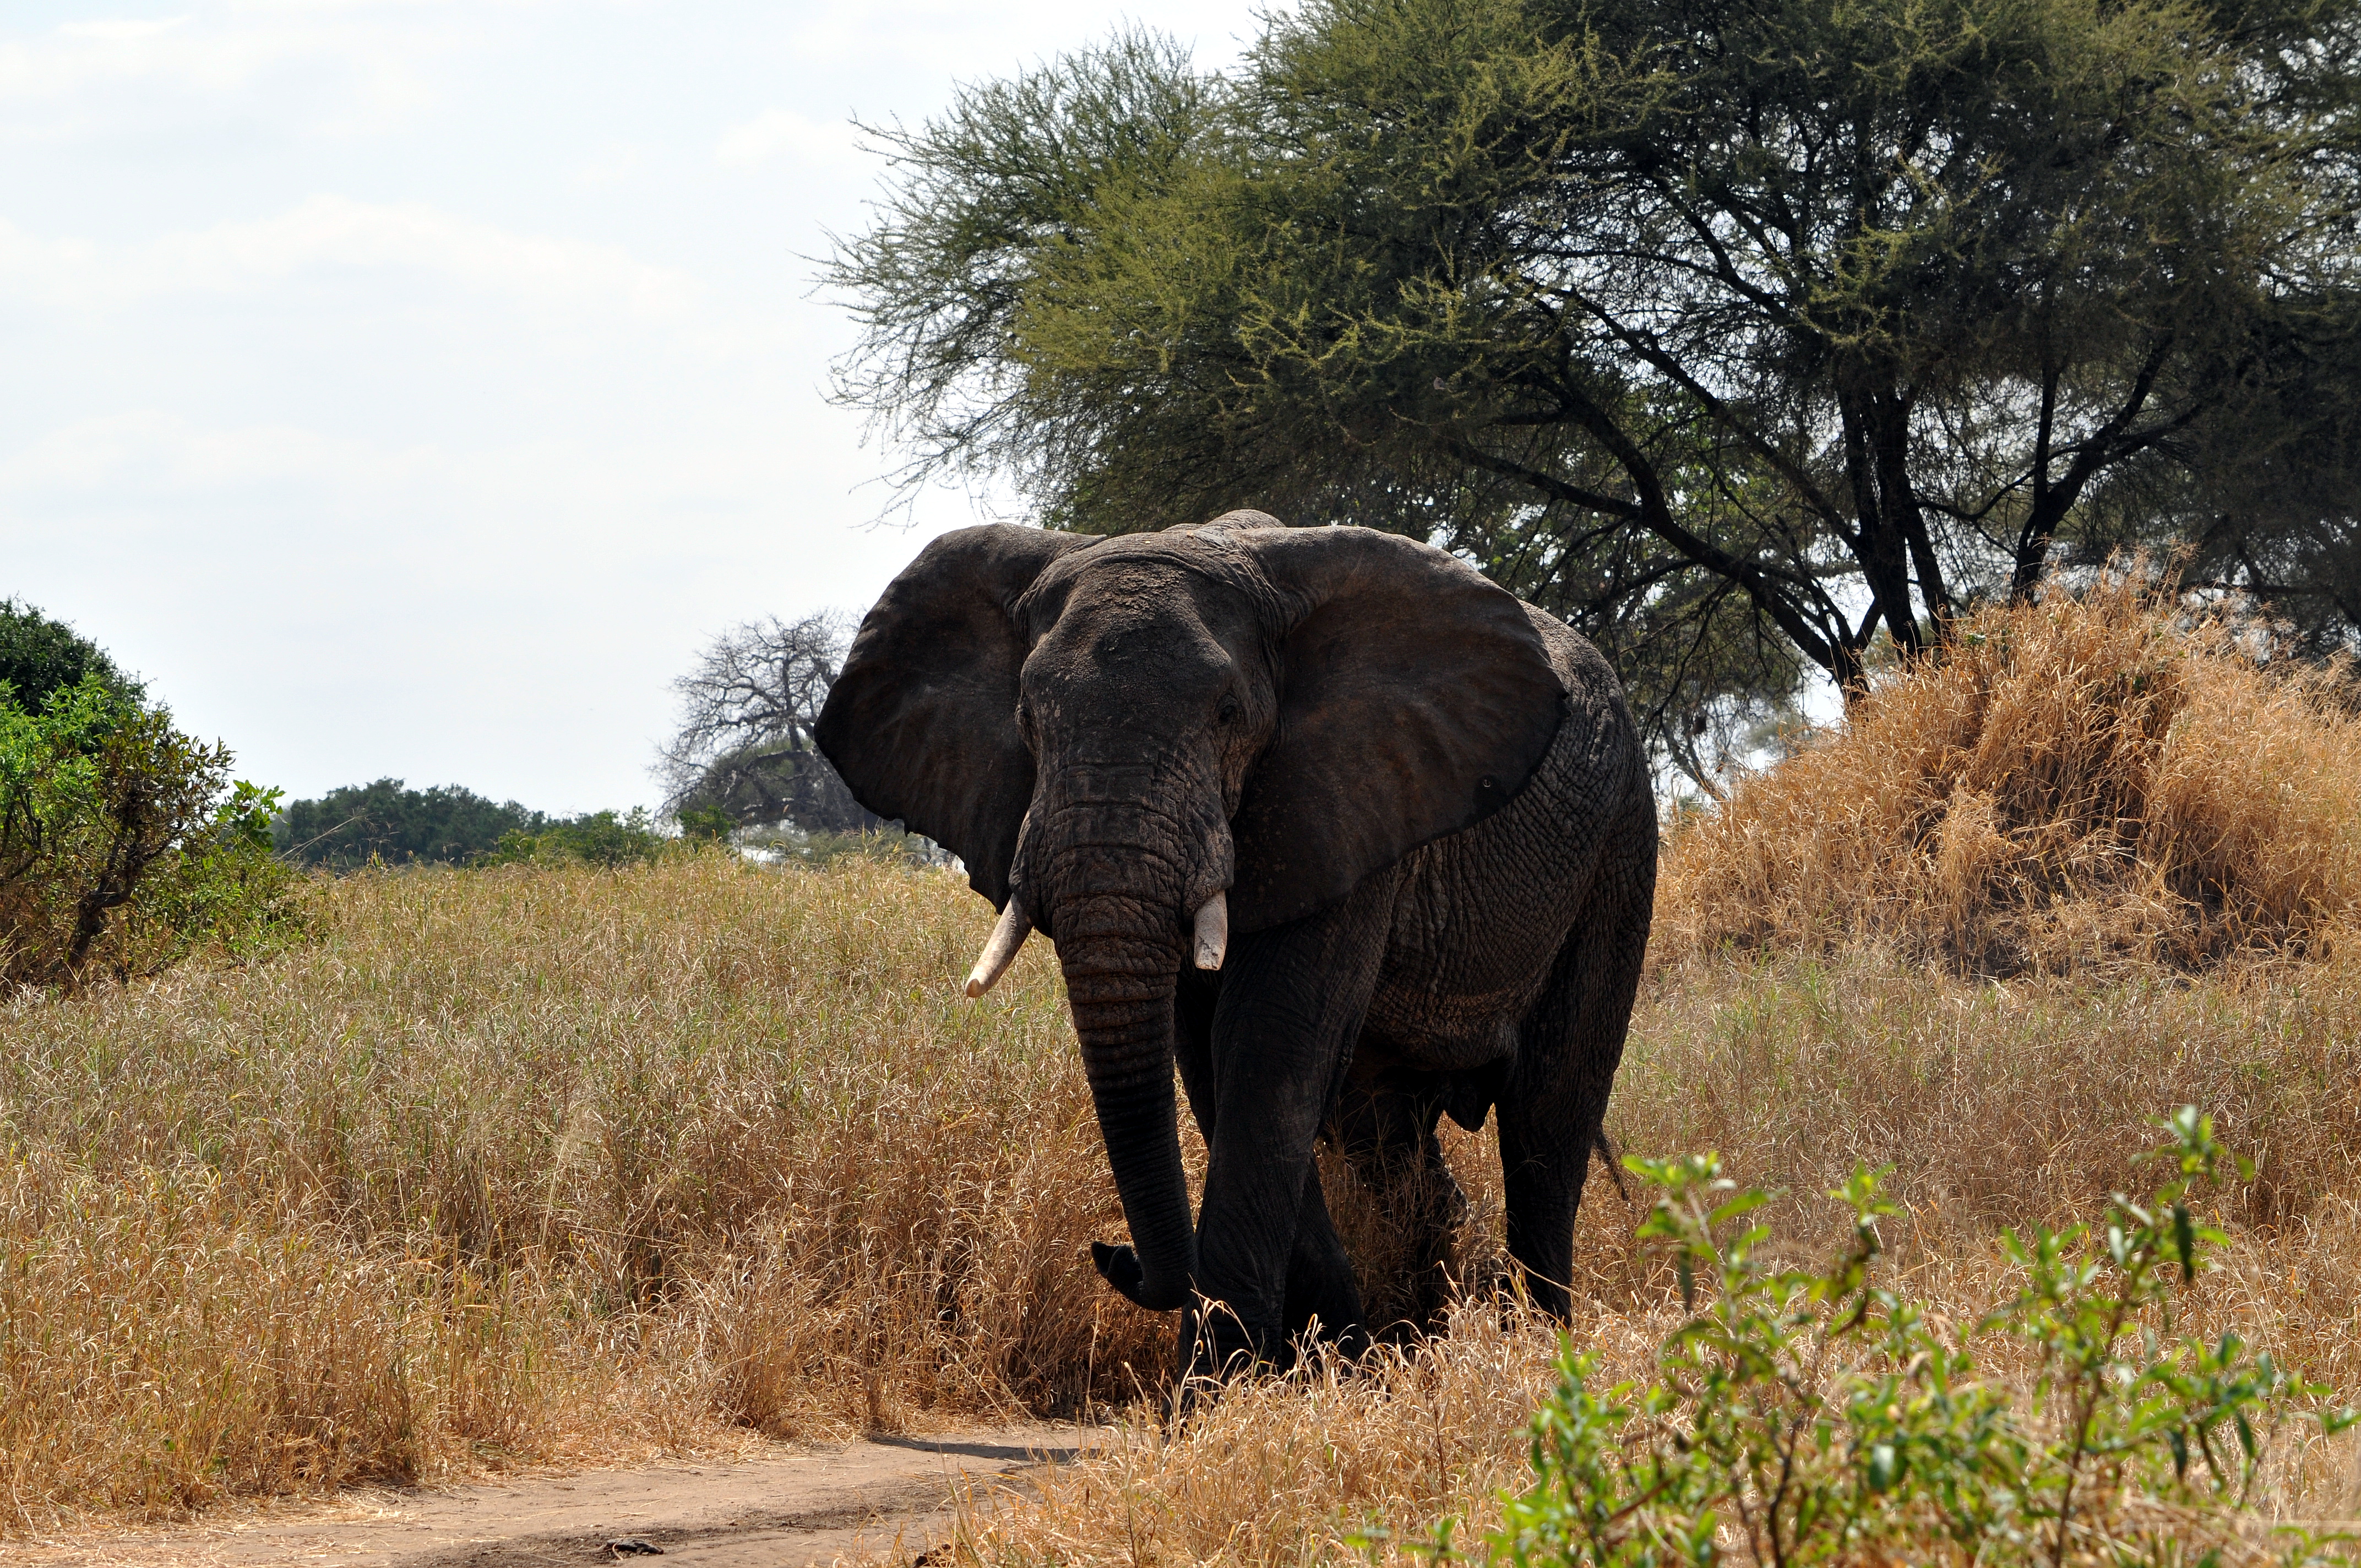 Biology Trip to Tanzania - July 2015